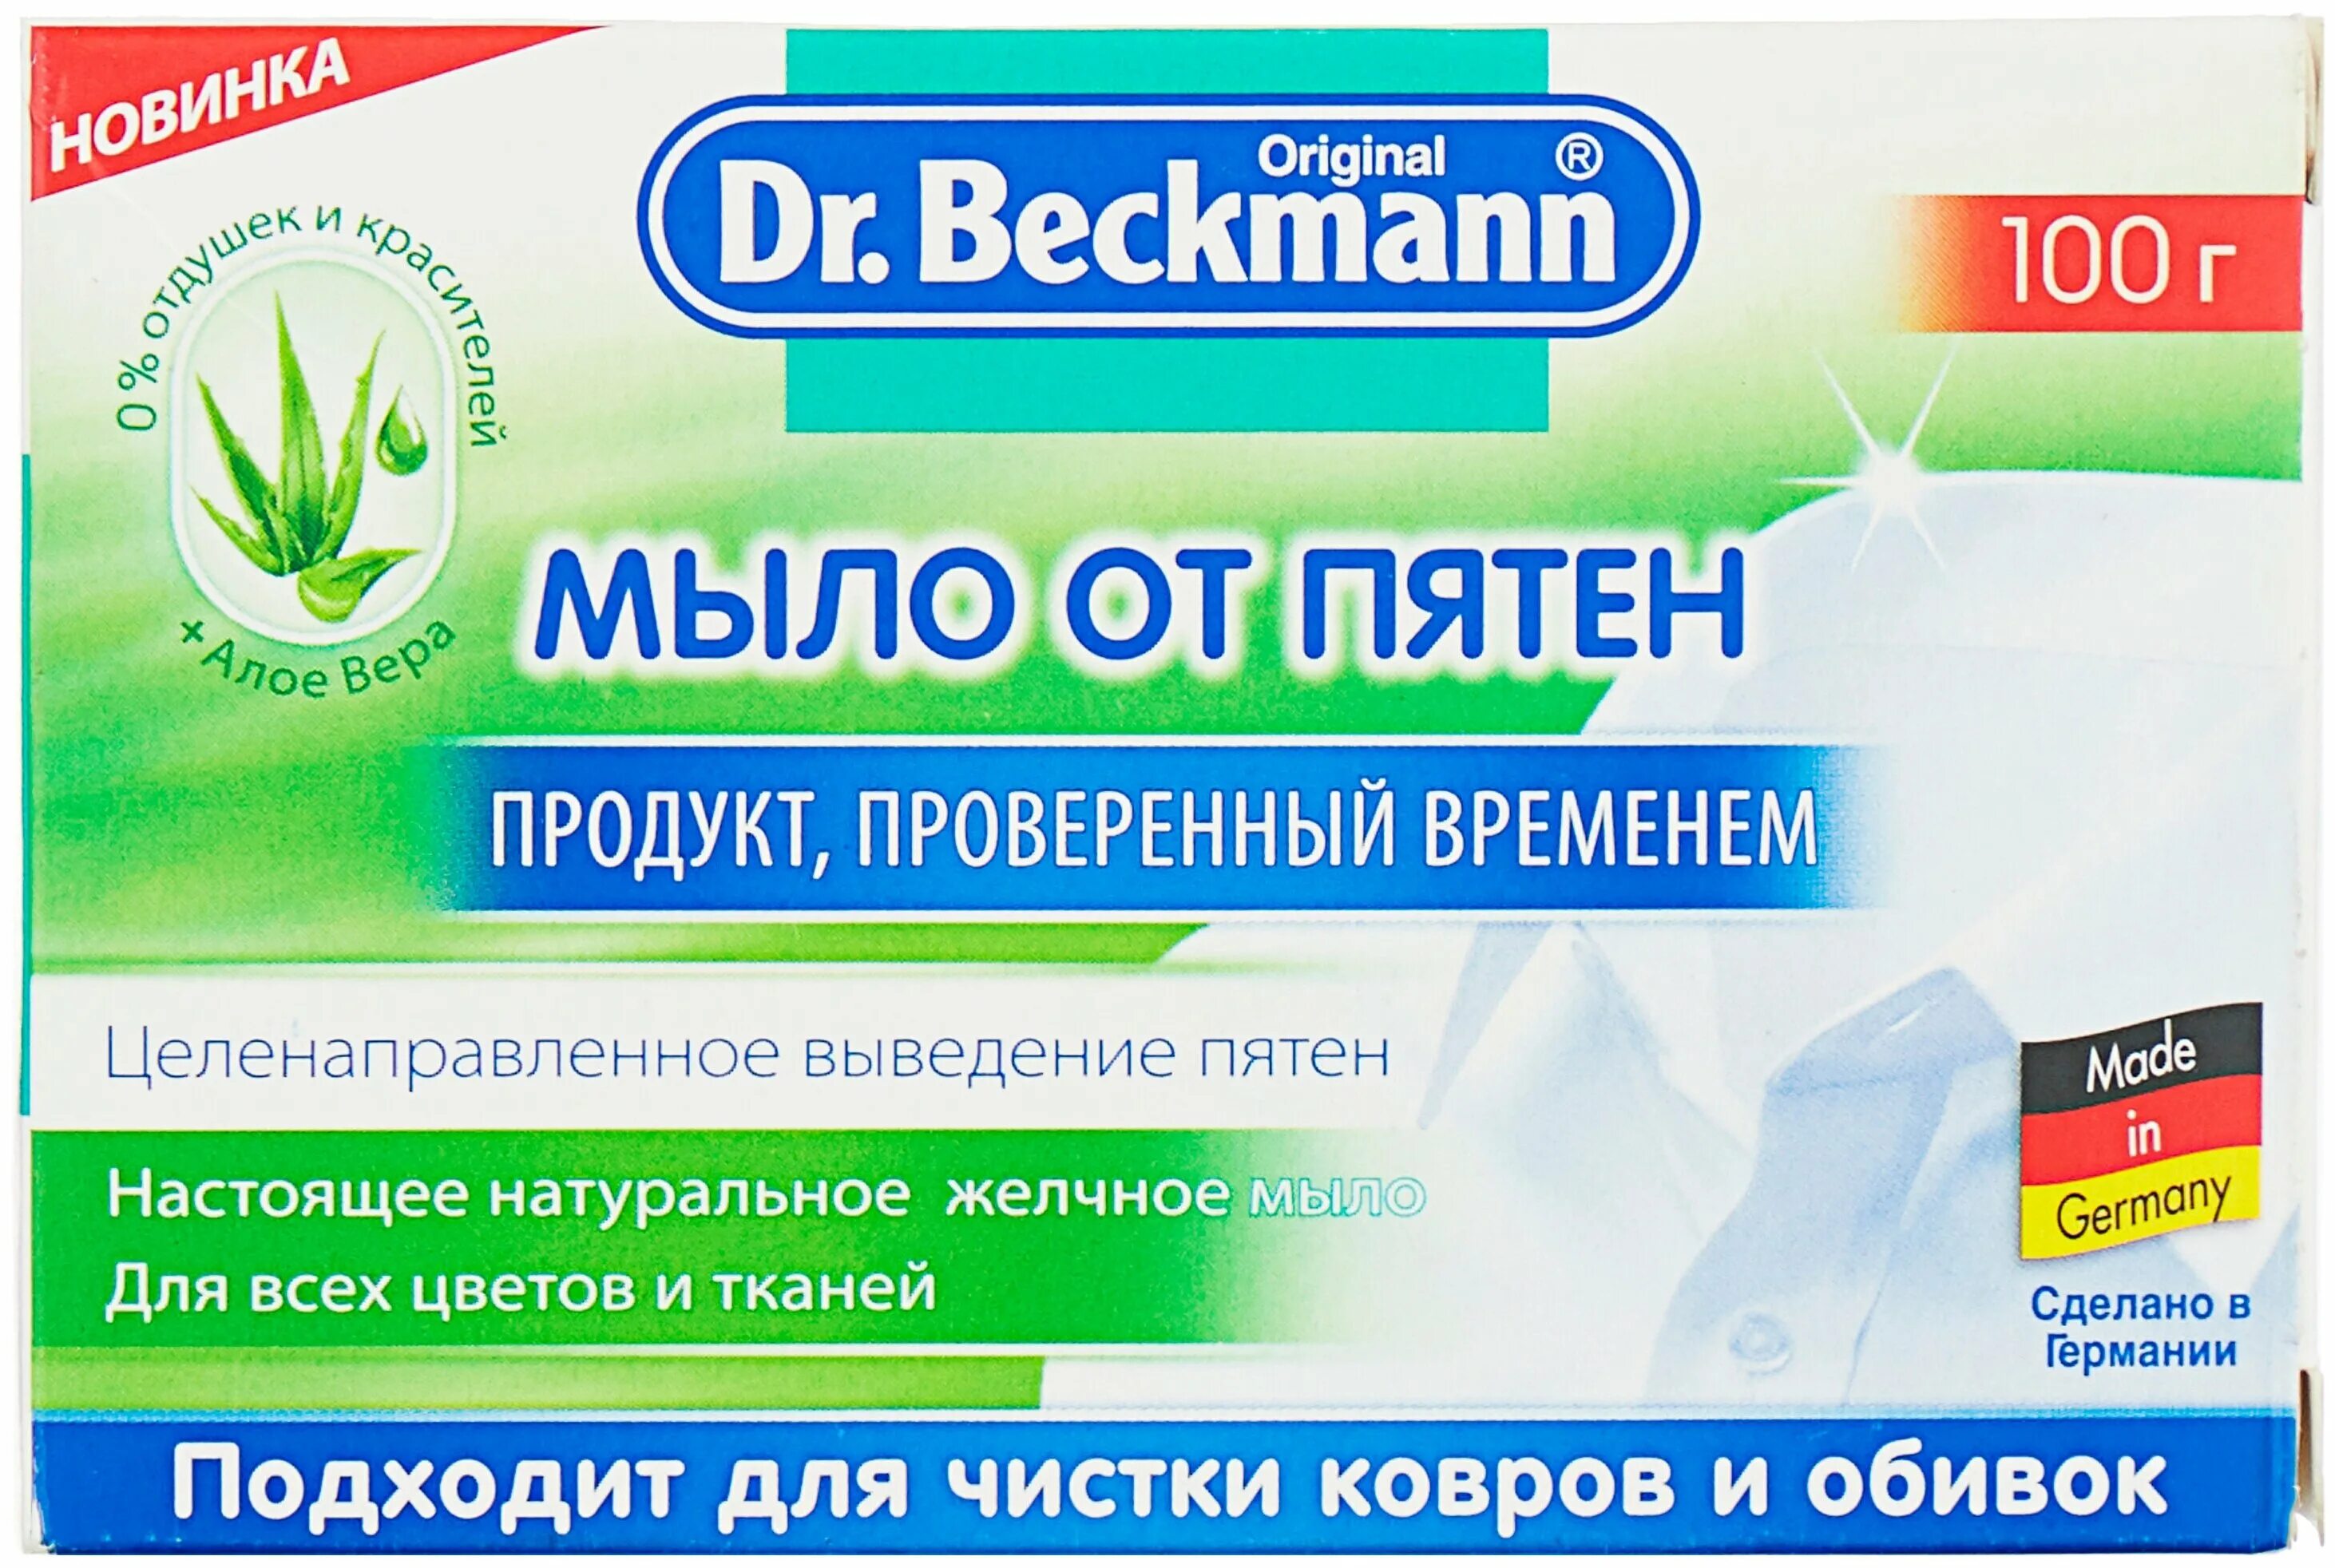 Эффективное средство от пятен. Мыло Dr Beckmann. Мыло от пятен немецкое Dr. Bechman. Хозяйственное мыло Dr. Beckmann от пятен. Мыло доктор Бекман от пятен.